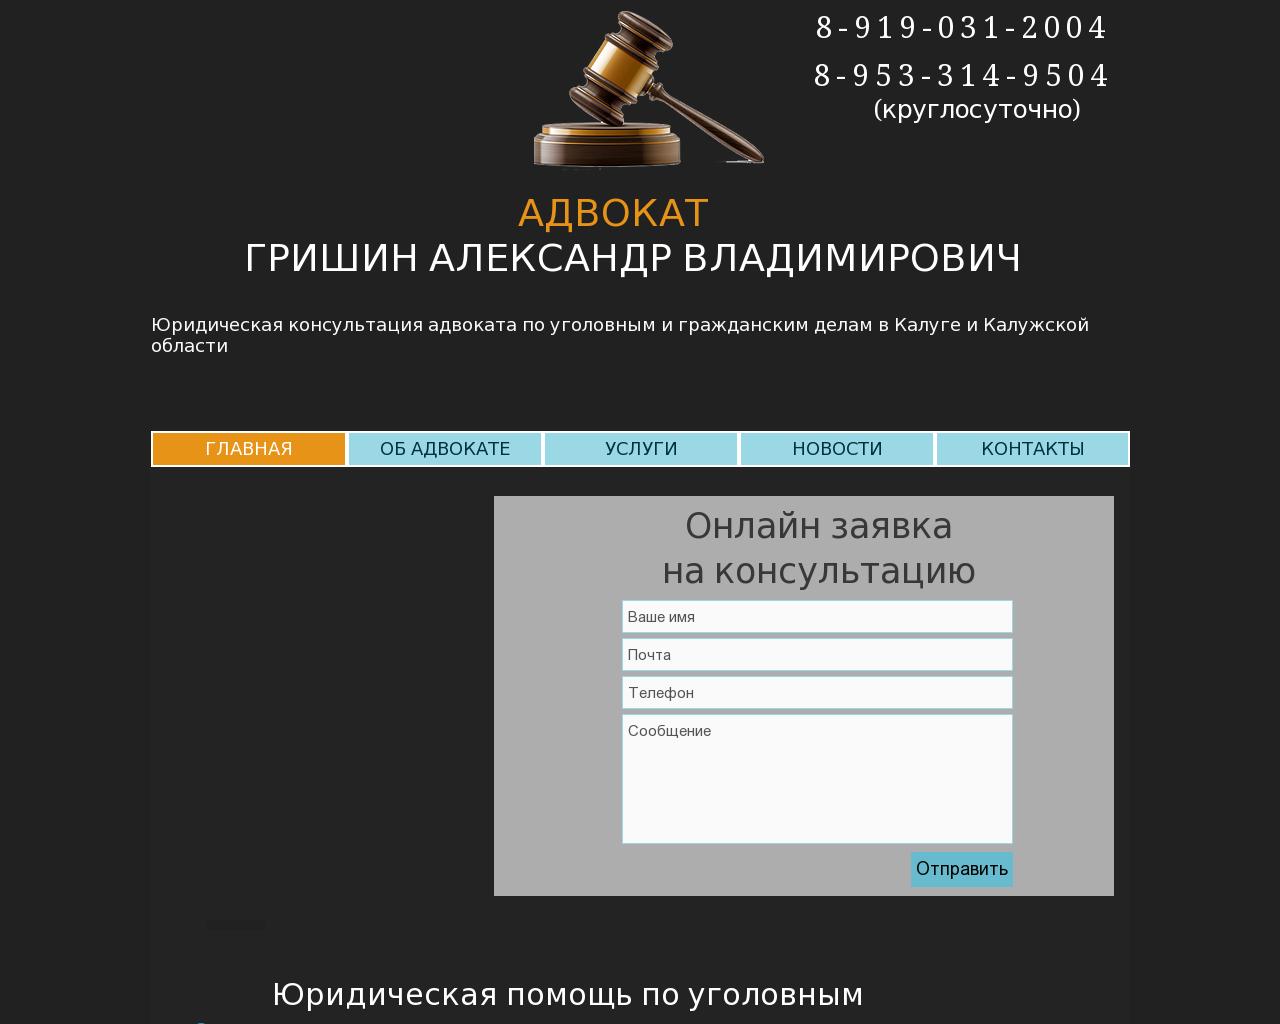 Изображение сайта advokat-grishin.ru в разрешении 1280x1024